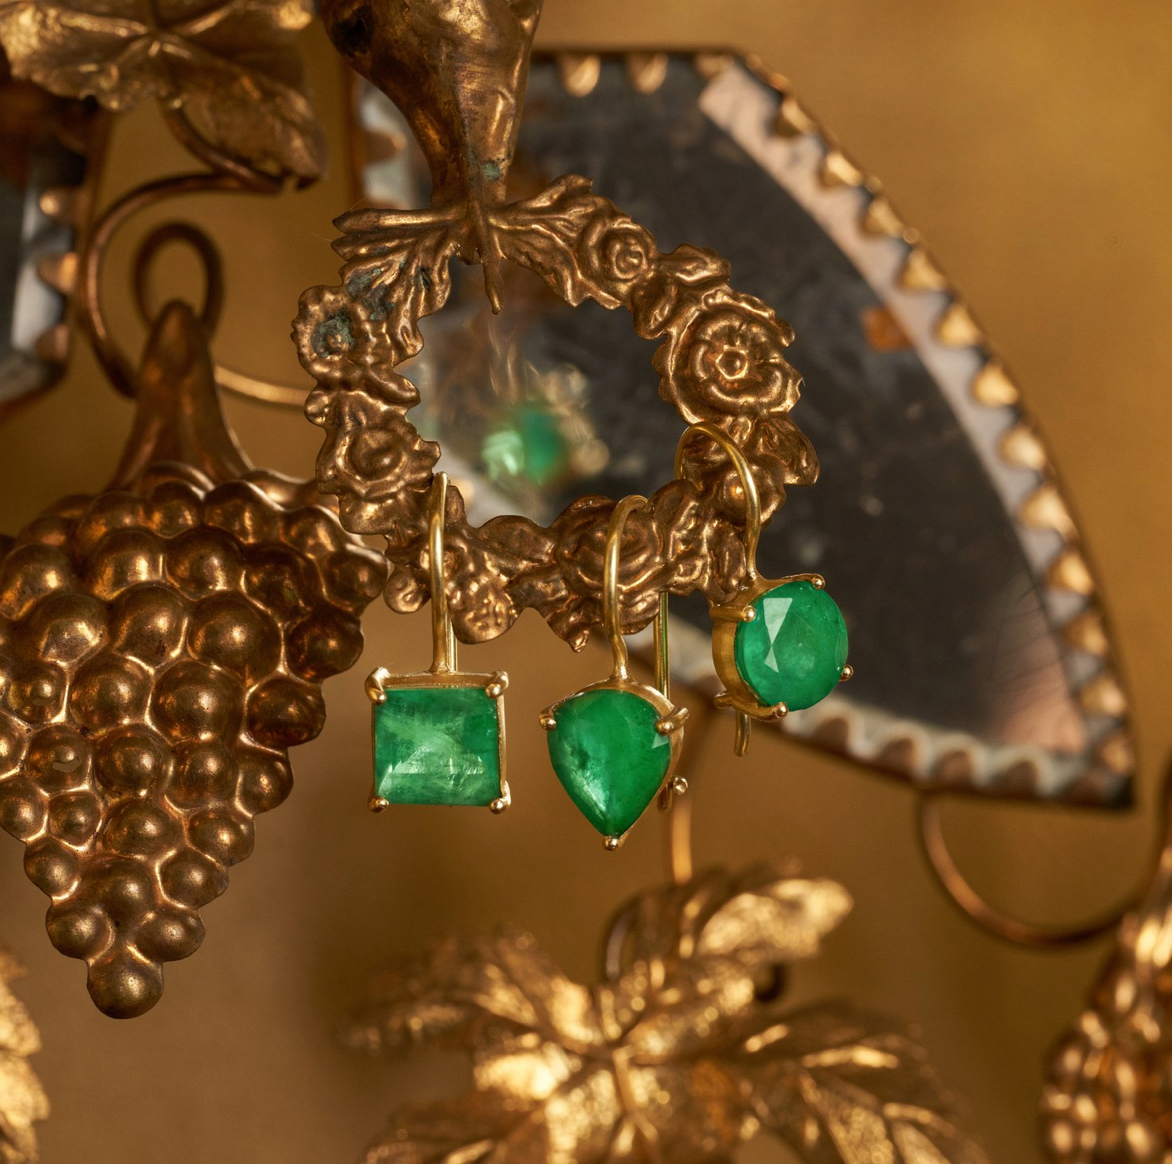 Hetre Alresford Hampshire Jewellery Boutique Sophie Theakston Single Square Emerald Earring  Edit alt text